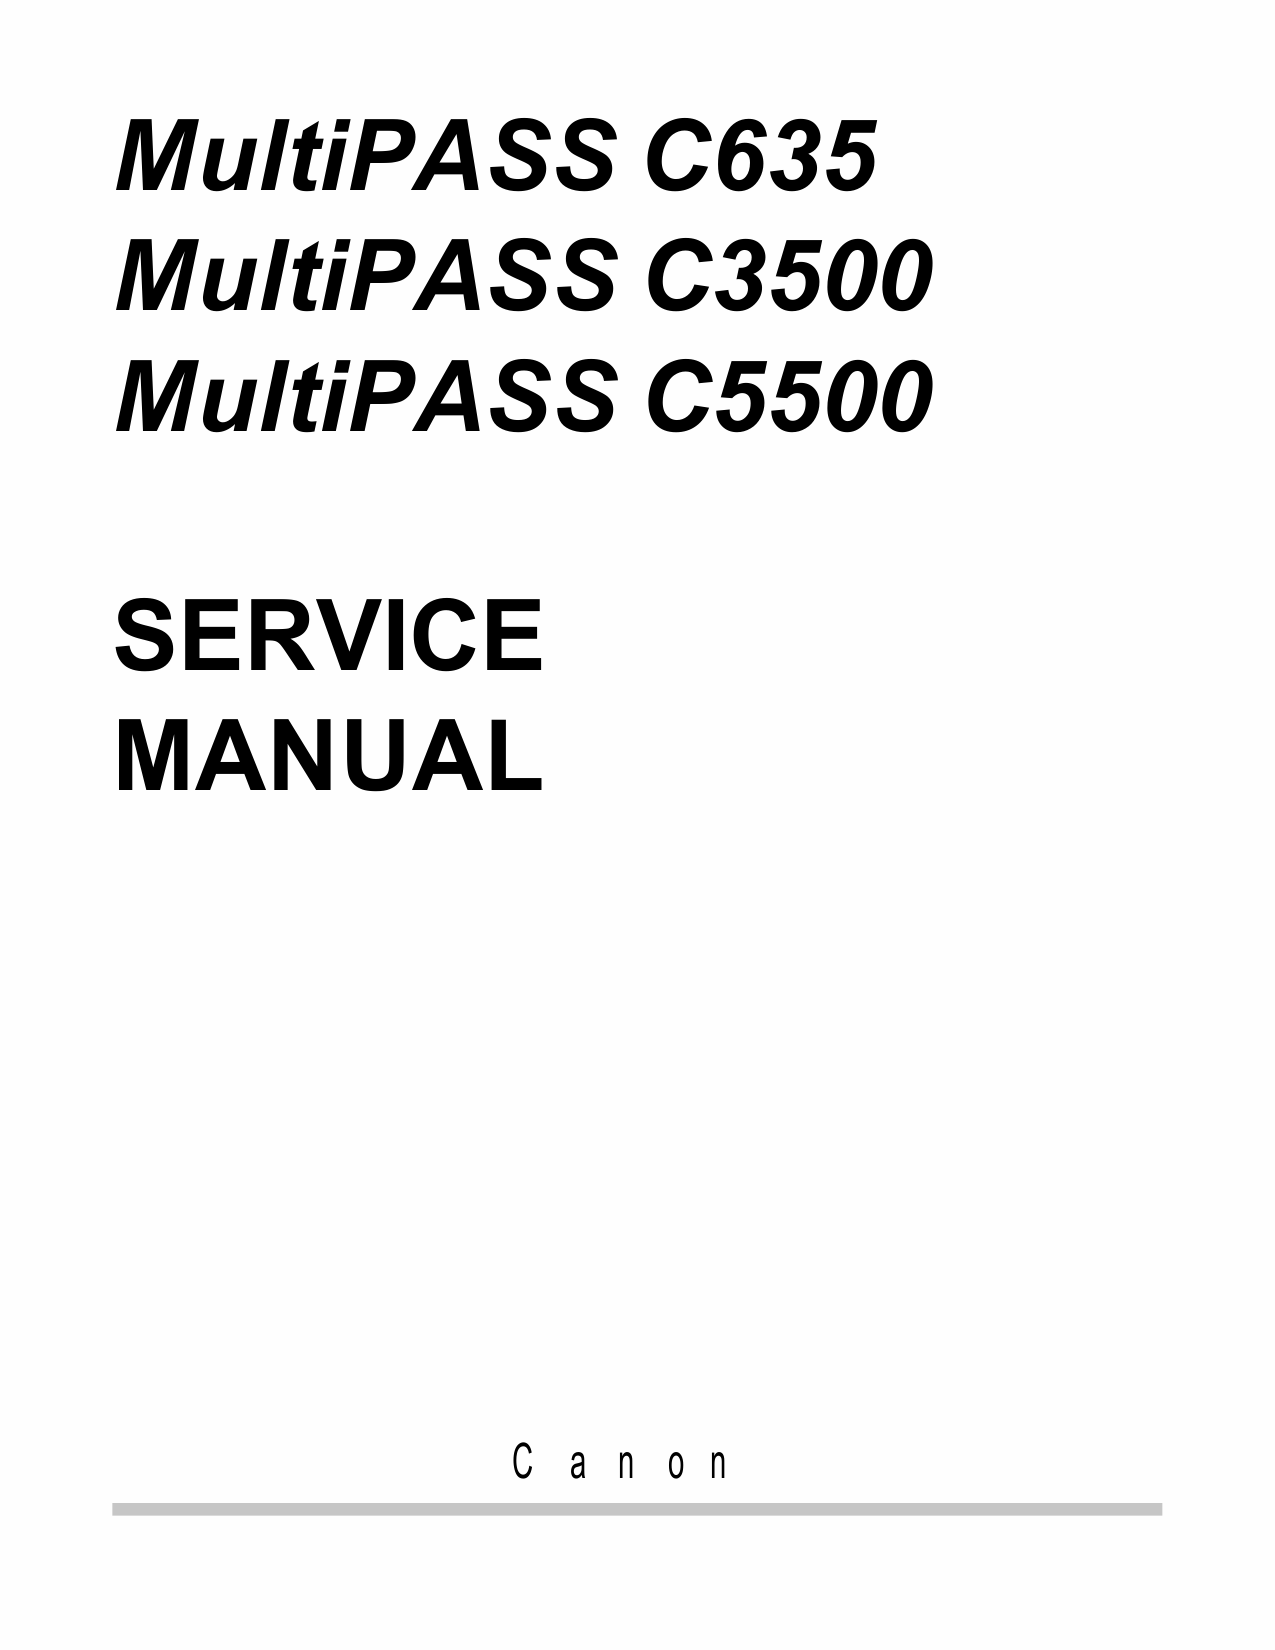 Canon MultiPASS MP-C635 C3500 C5500 Service Manual-1